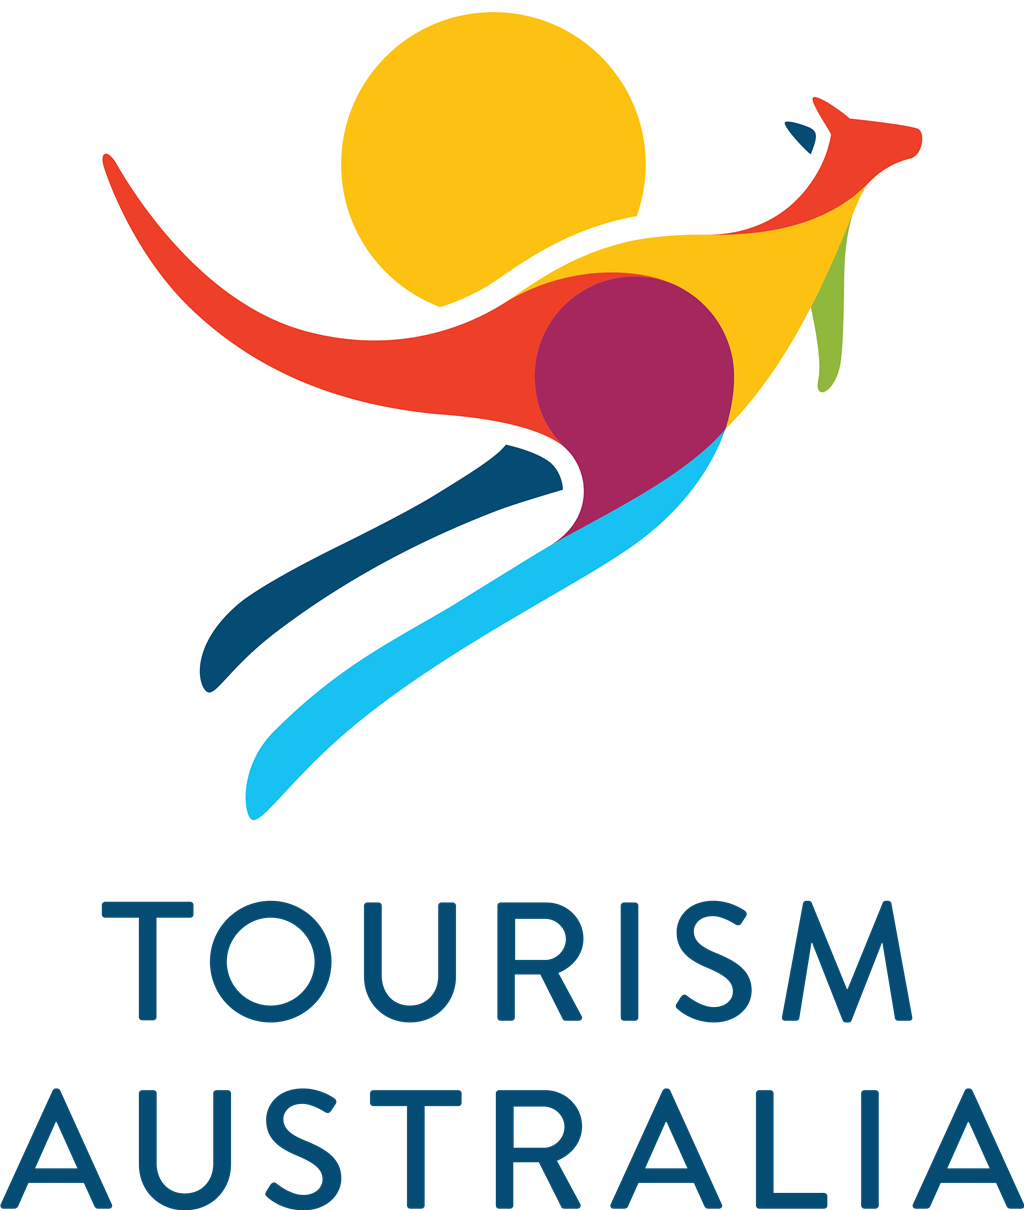 Tourism Australia logotype, transparent .png, medium, large